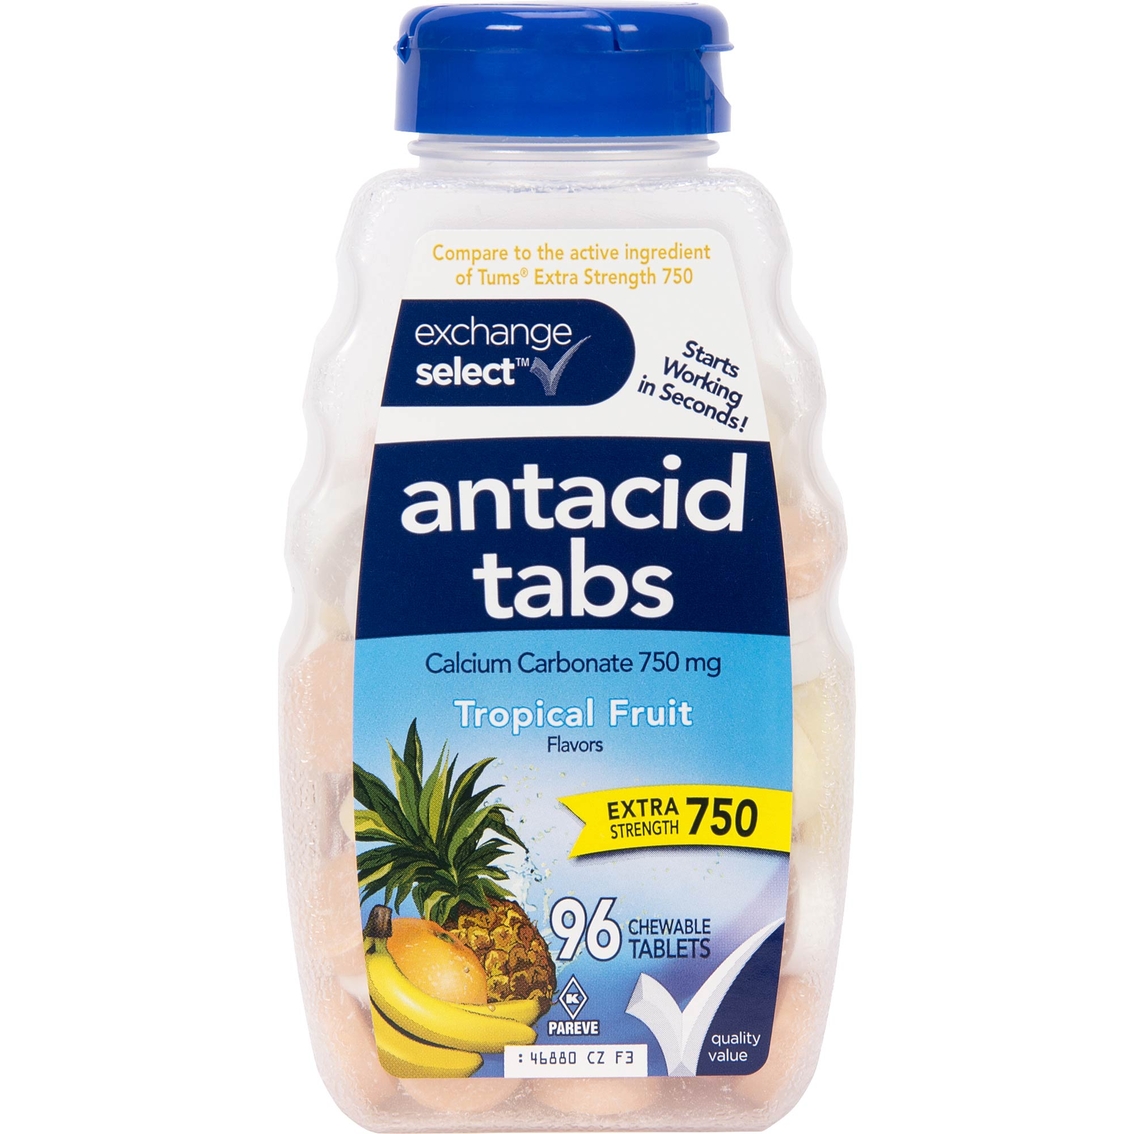 exchange select chewable antacid tablets | digestive health & nausea